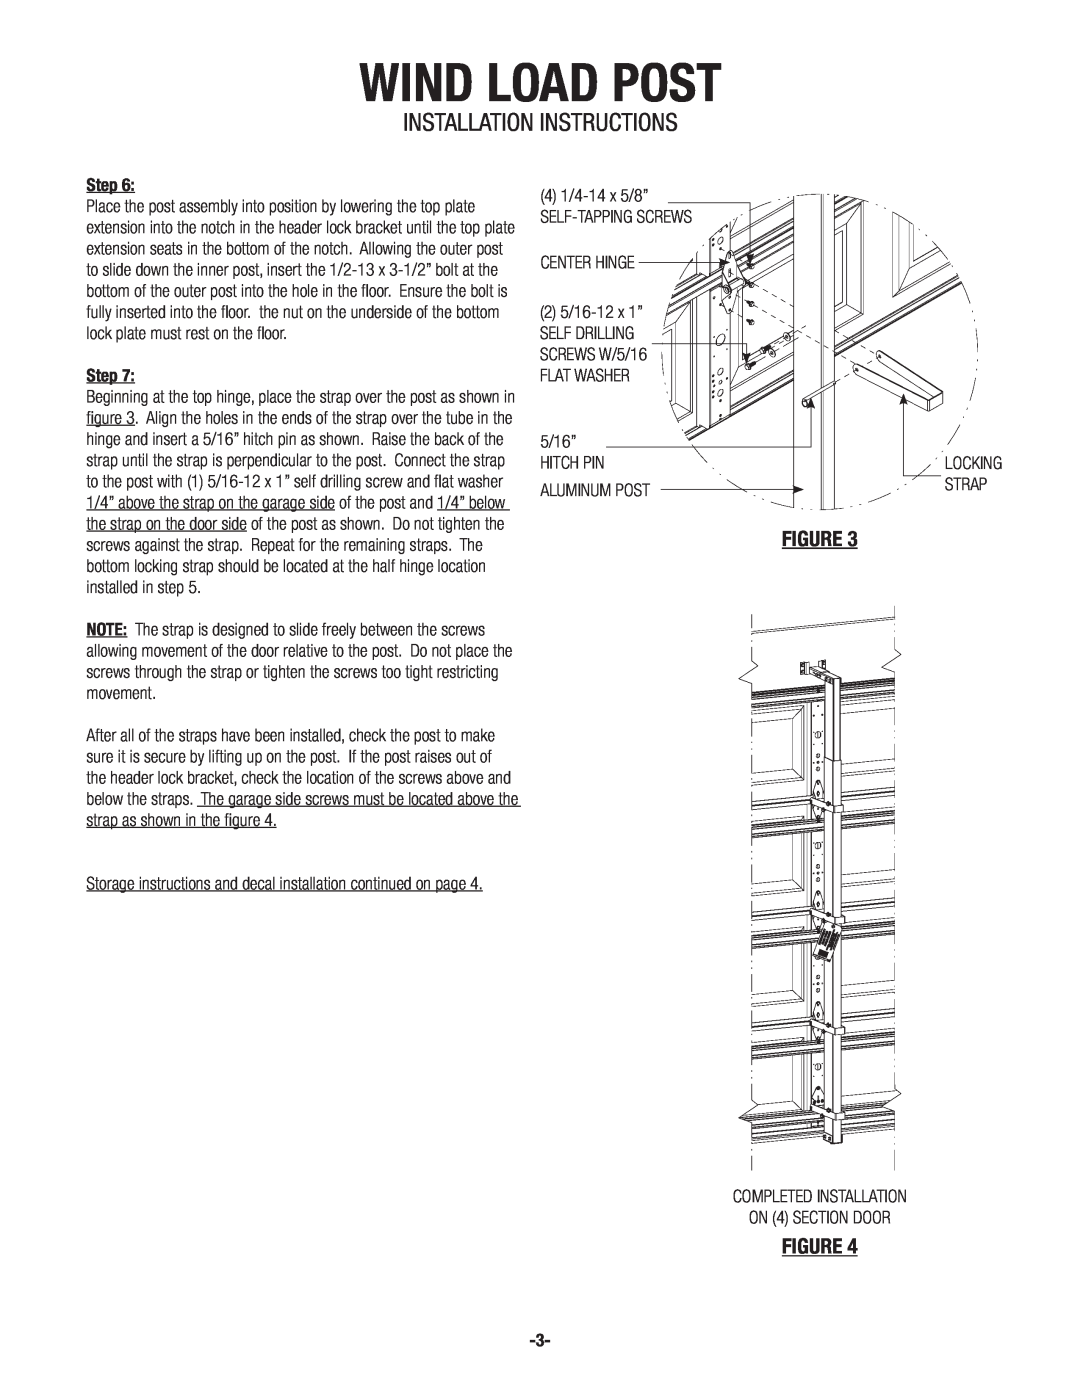 Wayne-Dalton 8100, 8024, 8124 installation instructions Wind Load Post, Installation Instructions, Step 